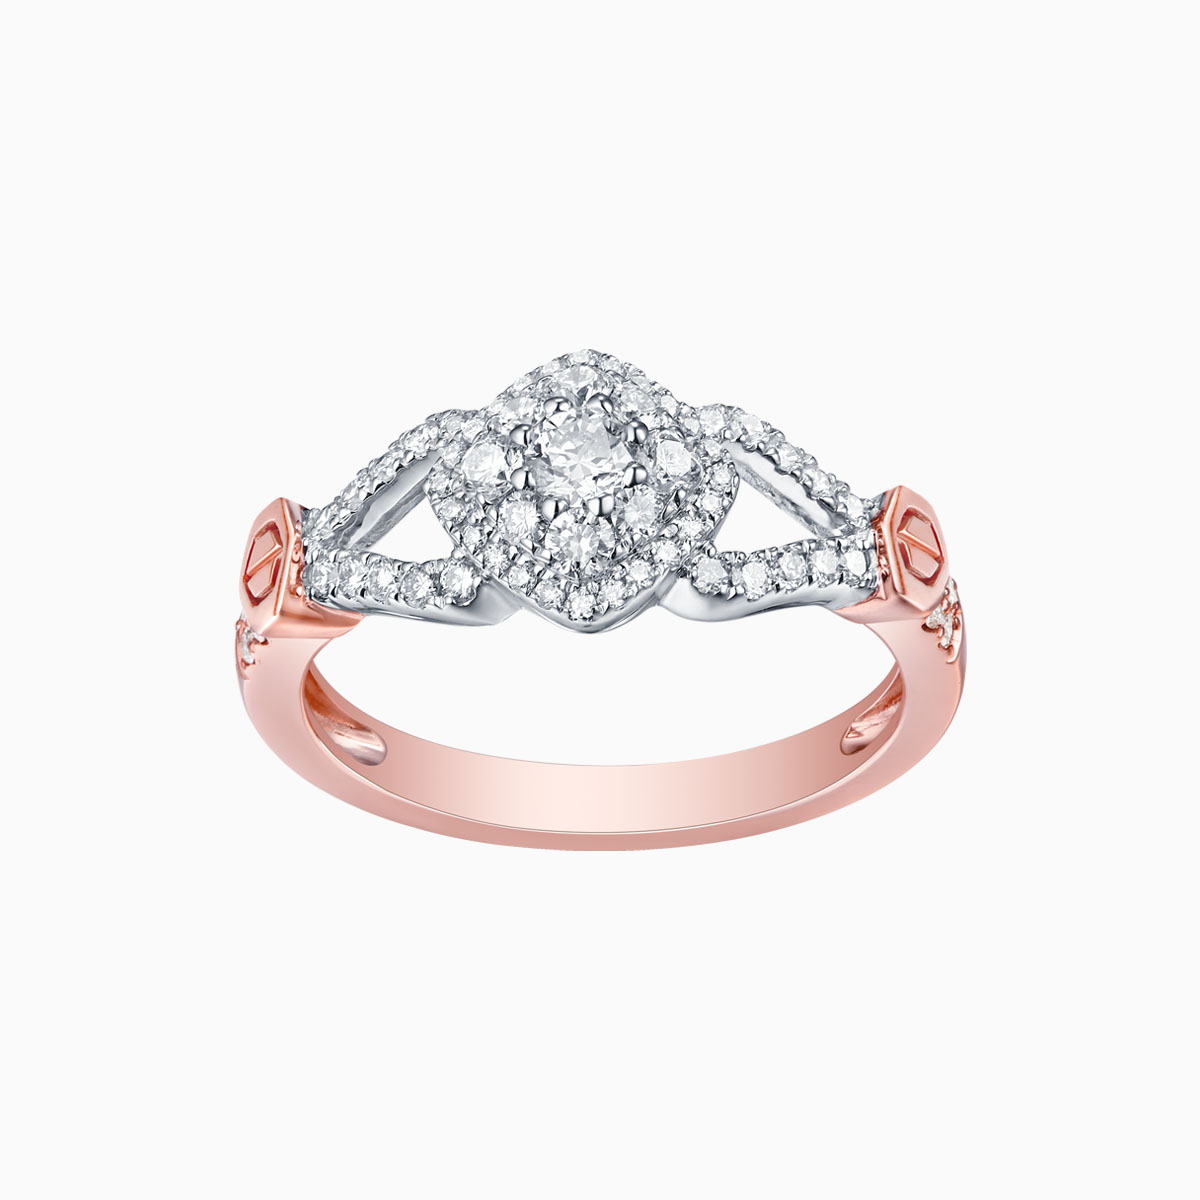 R17416WHT- 14K Rose Gold Diamond Ring, 0.60 TCW